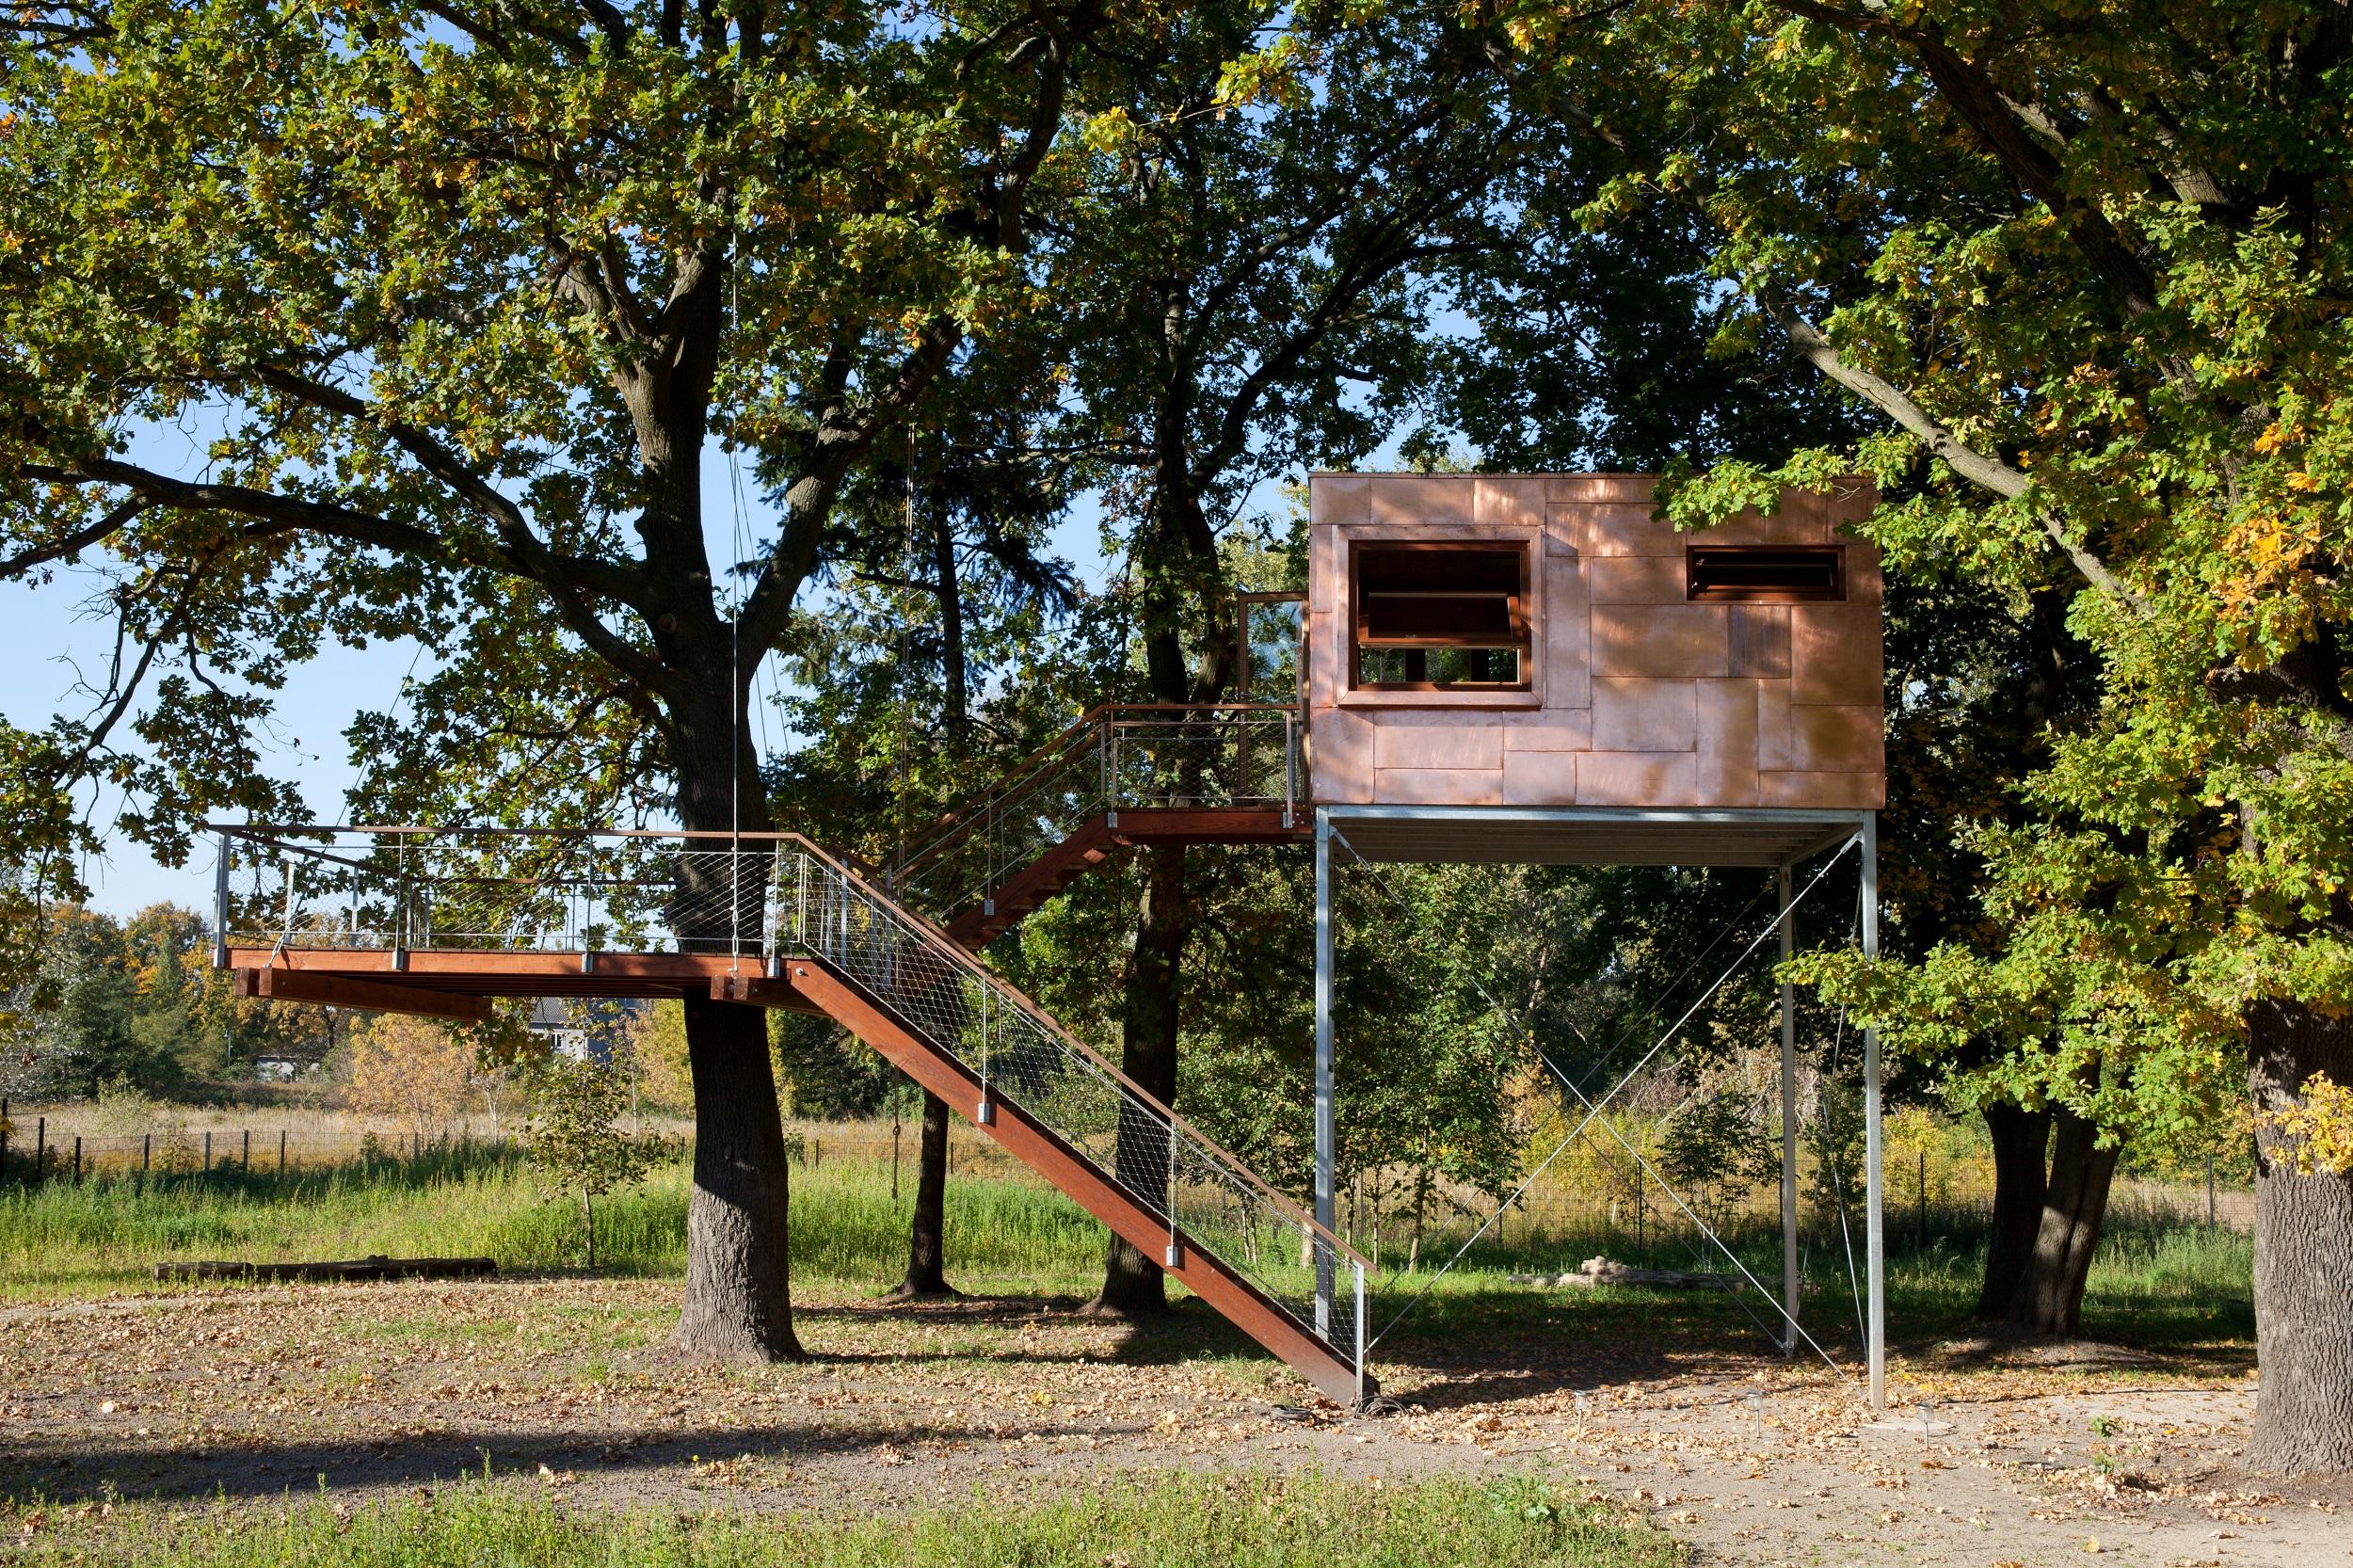 Baumhaus mit Kupferfassade - nicht beschriften #baumhaus #stelzenhaus ©baumraum / Markus Bollen